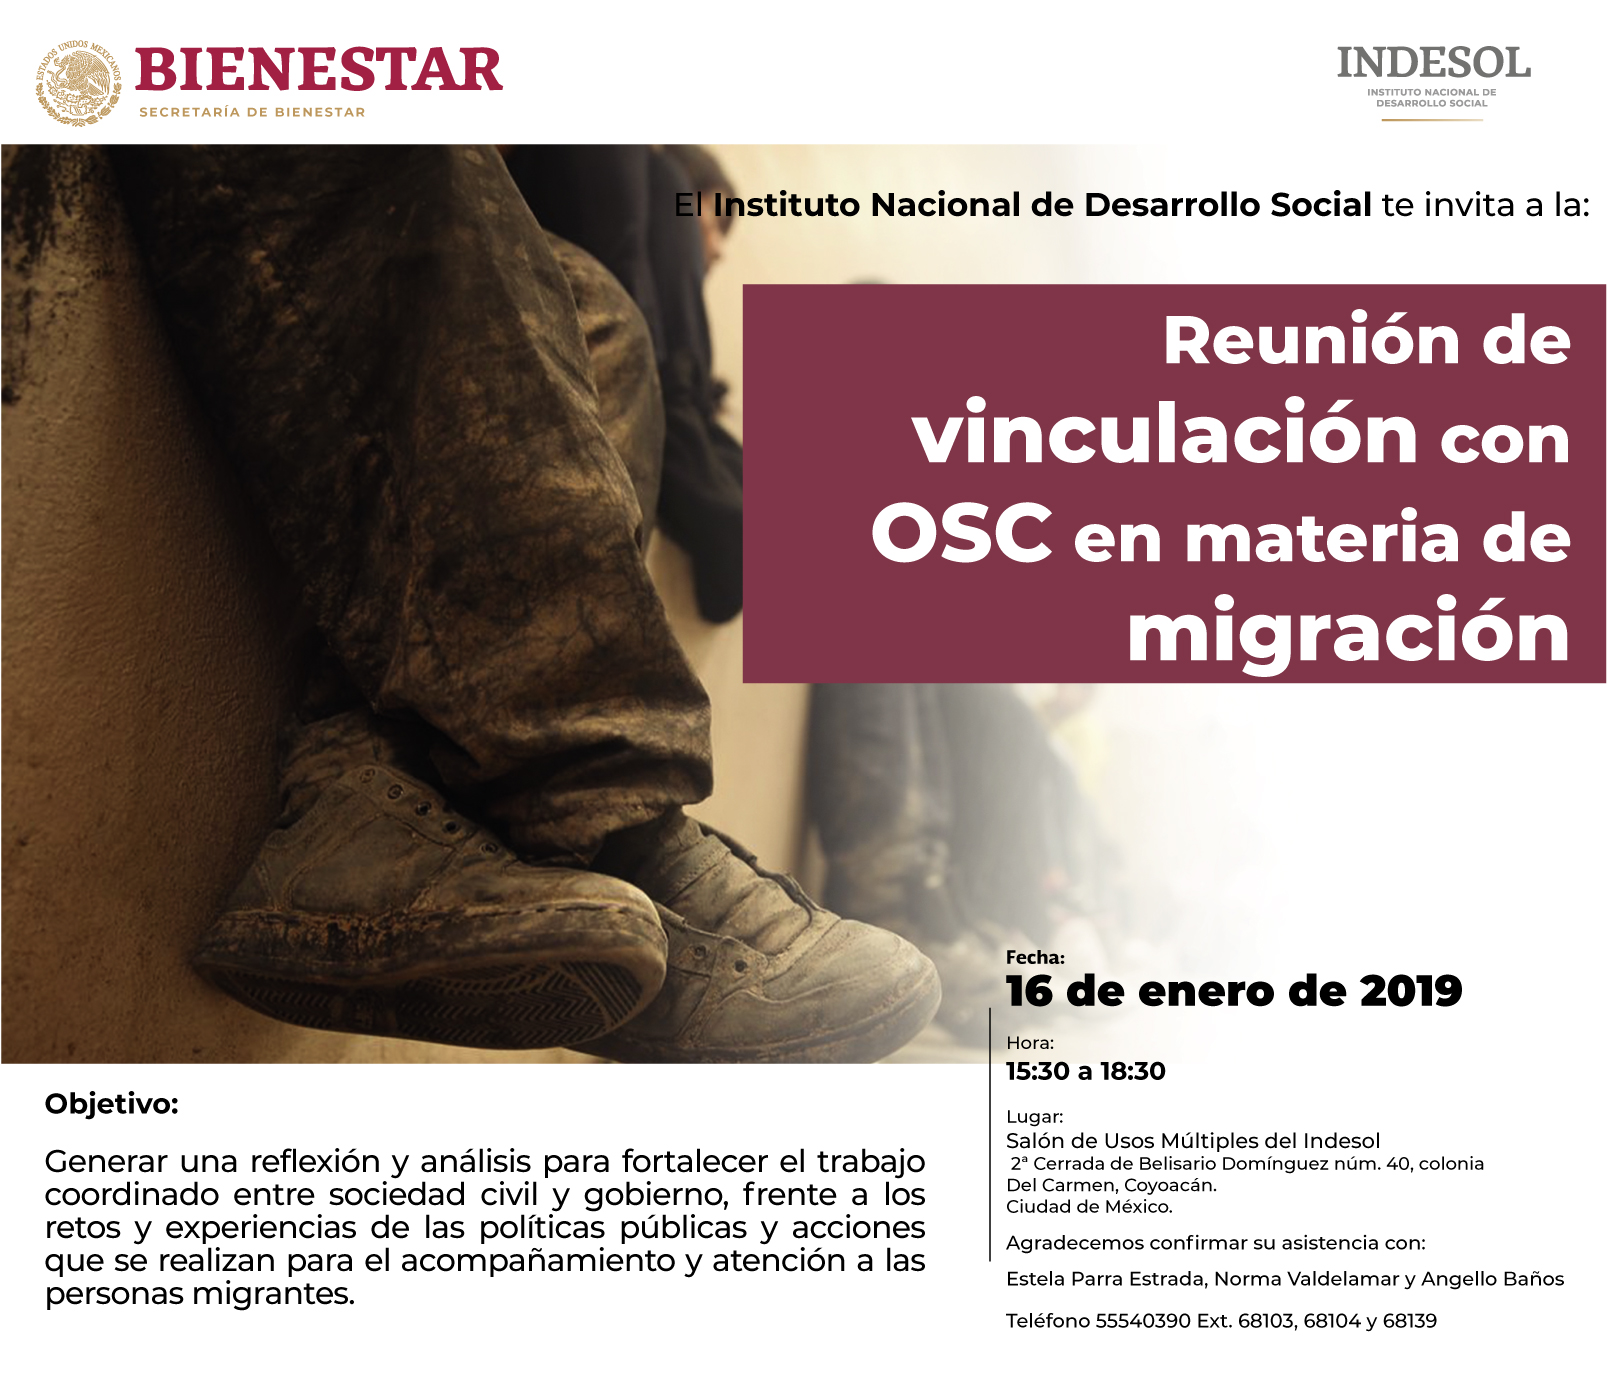 /cms/uploads/image/file/471078/invitacion-migrantes-2019-v3.jpg